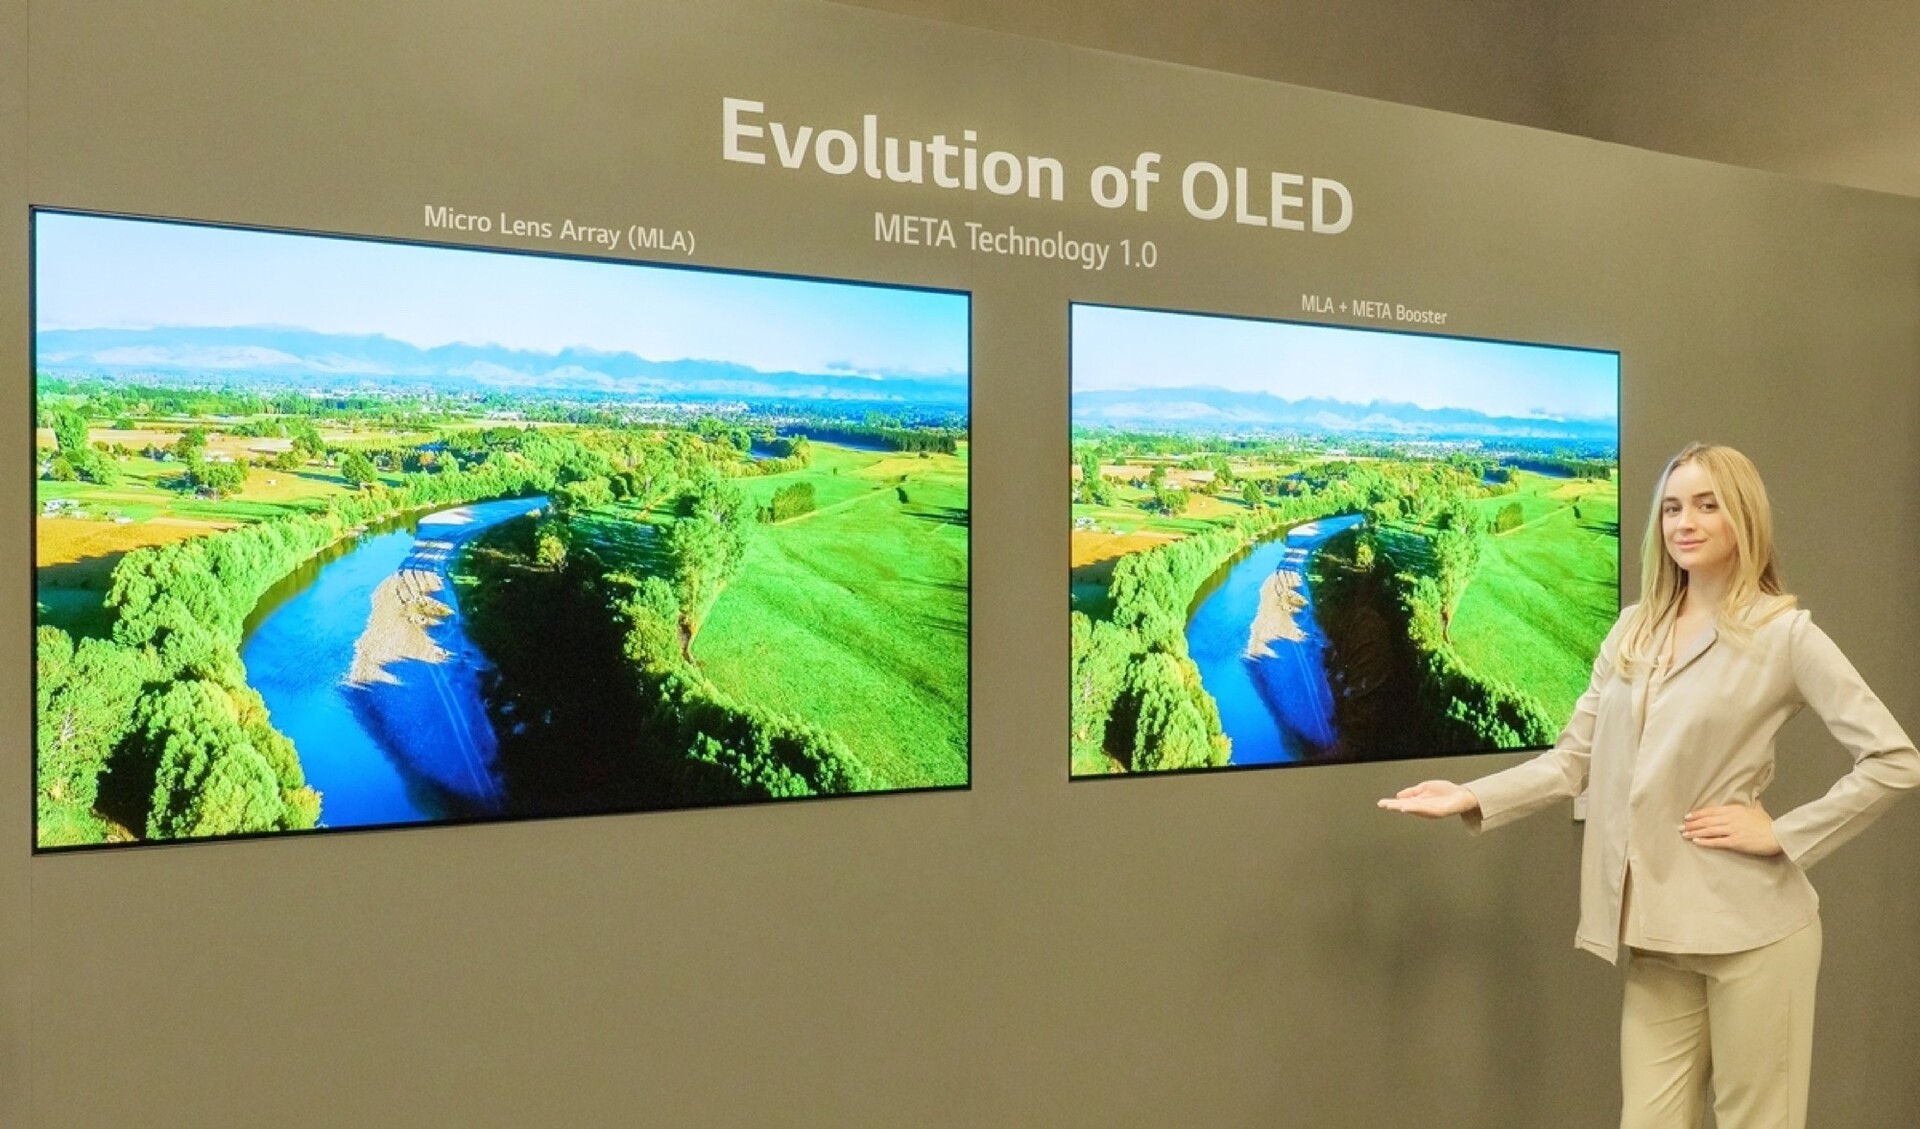 LG G3 OLED: LG promises 22% less power consumption from OLED Meta